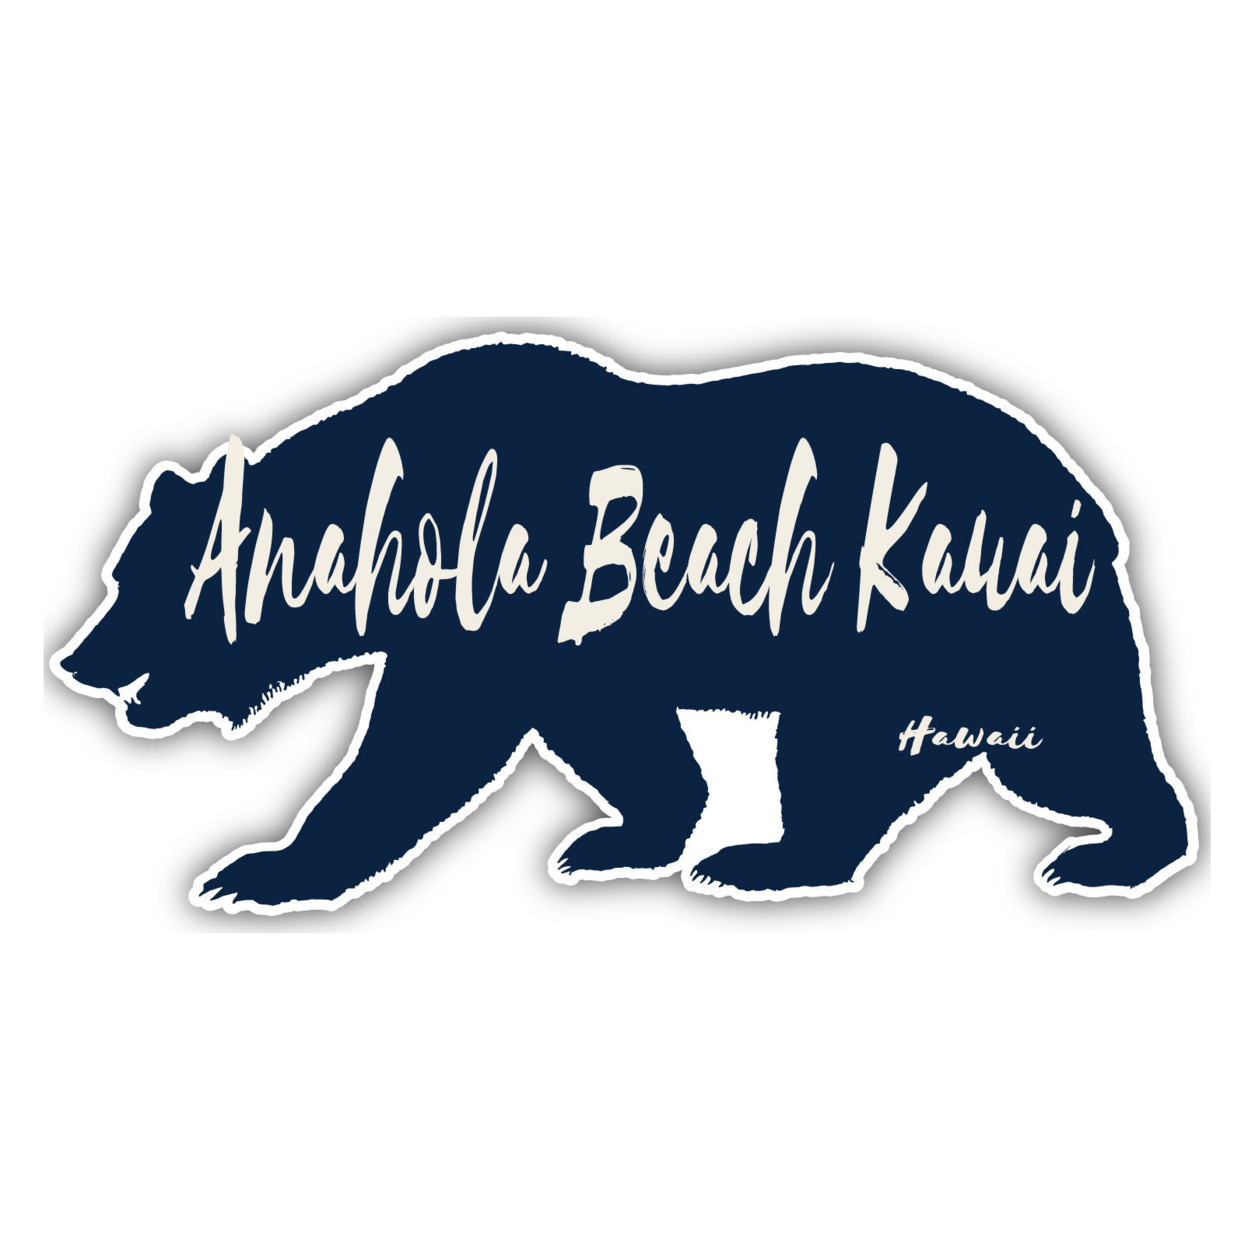 Anahola Beach Kauai Hawaii Souvenir Decorative Stickers (Choose Theme And Size) - 4-Pack, 12-Inch, Bear